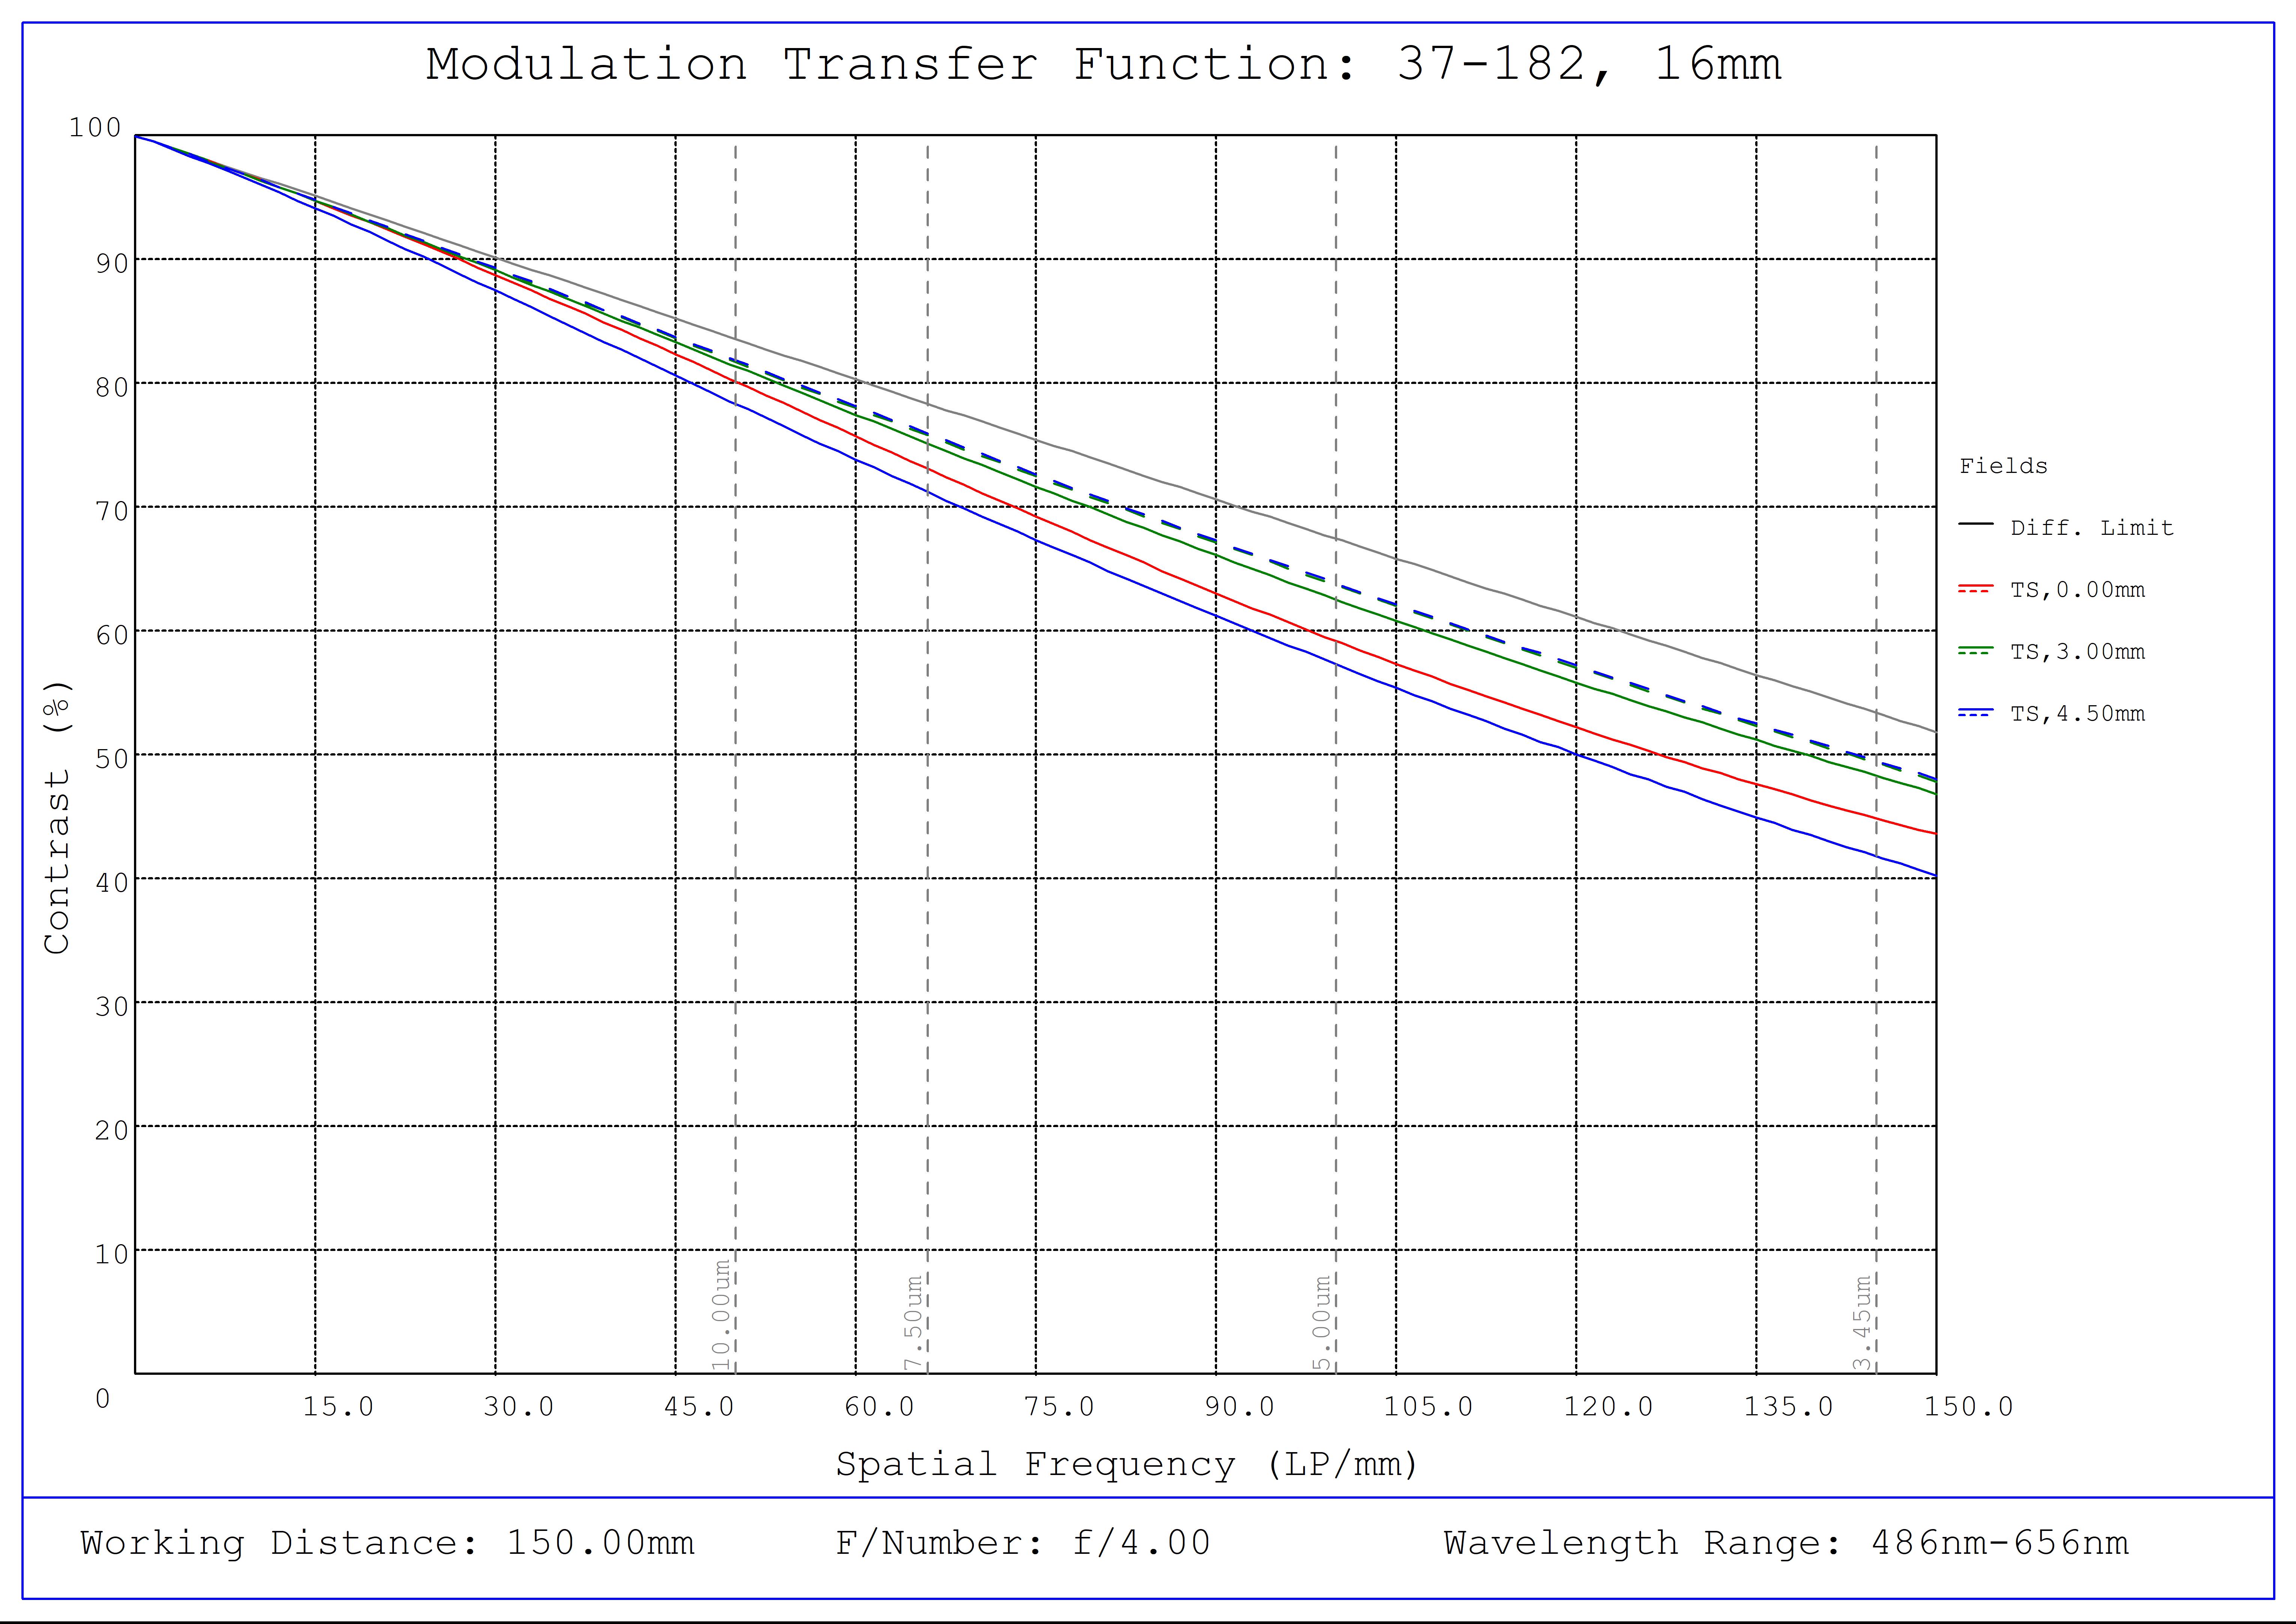 #37-182, 16mm FL f/4.0 Blue Series M12 Lens, Modulated Transfer Function (MTF) Plot, 150mm Working Distance, f4